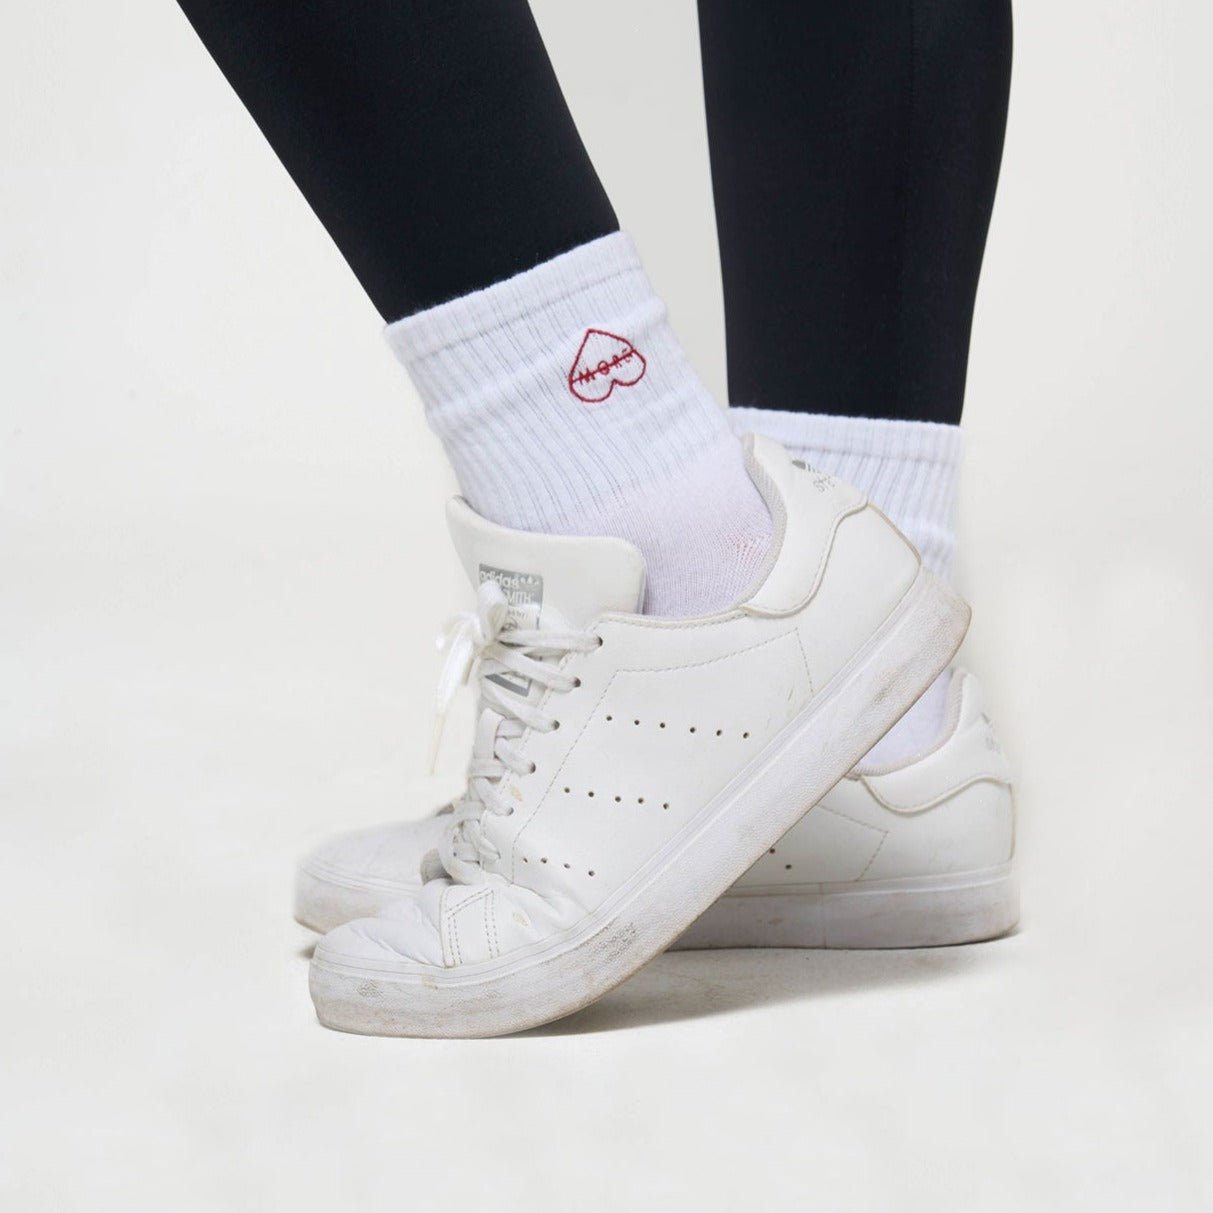 A-MORE  Gym Socks - Calze palestra